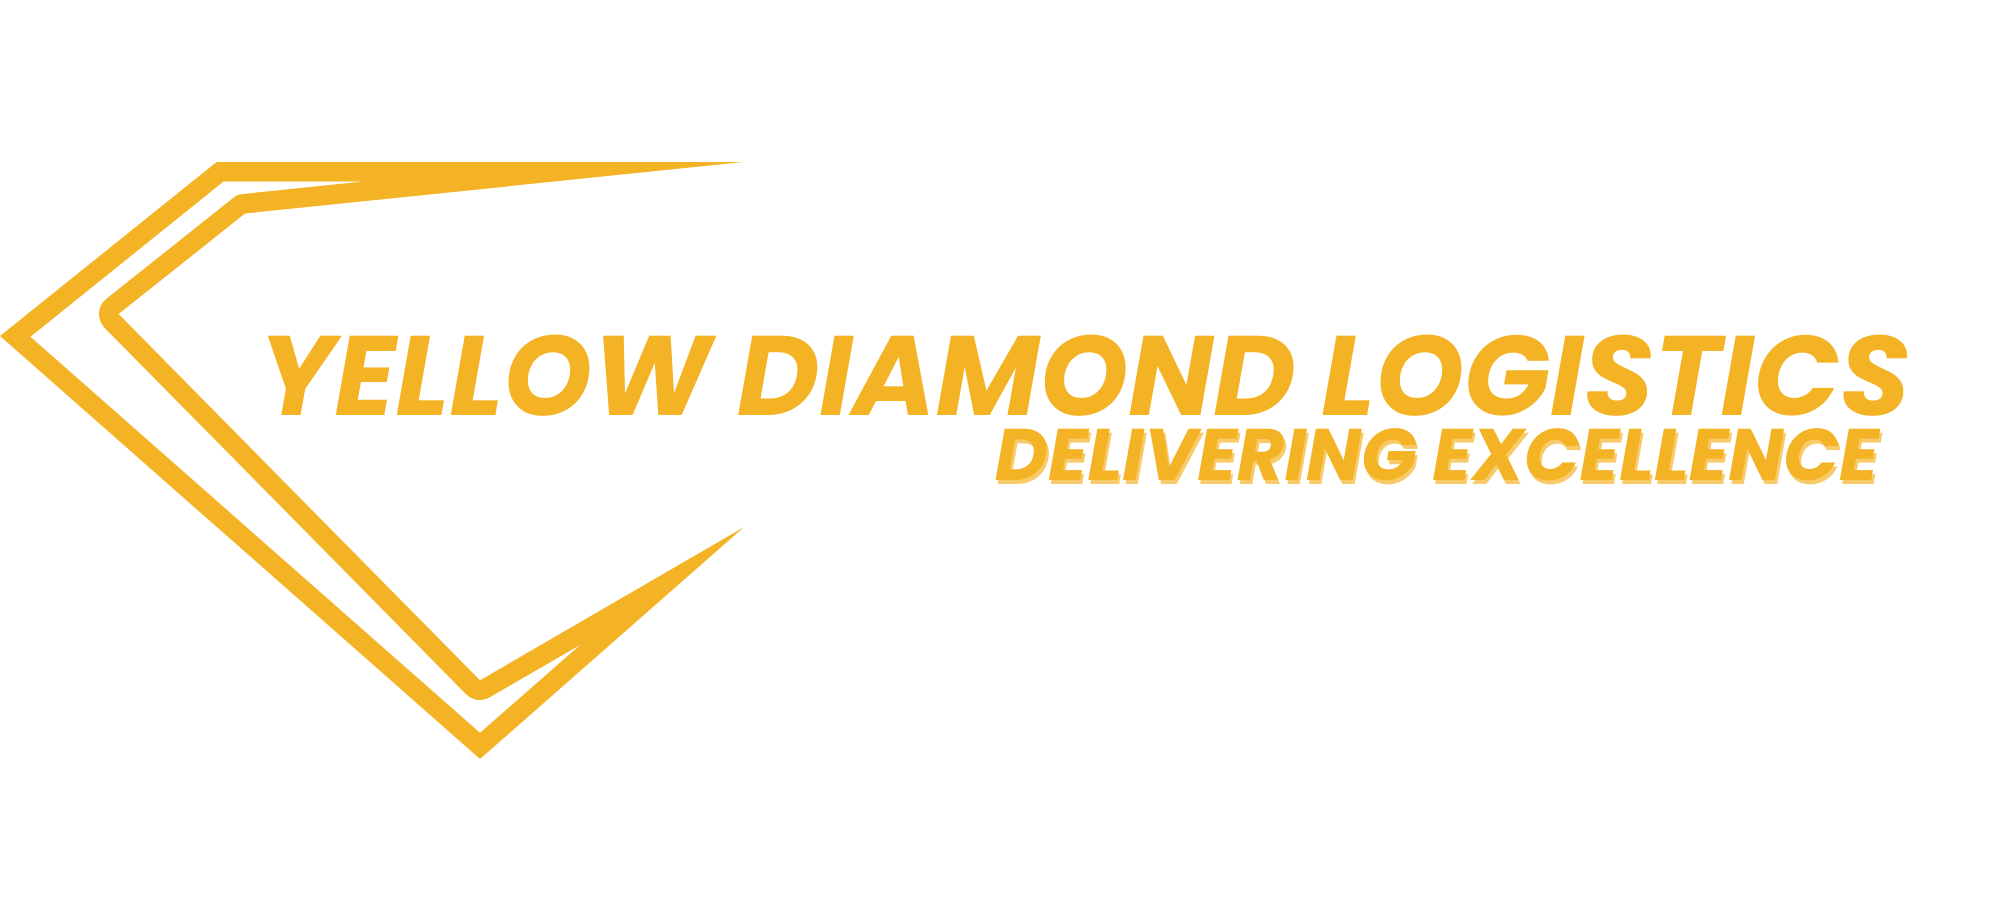 Yellow Diamond Logistics